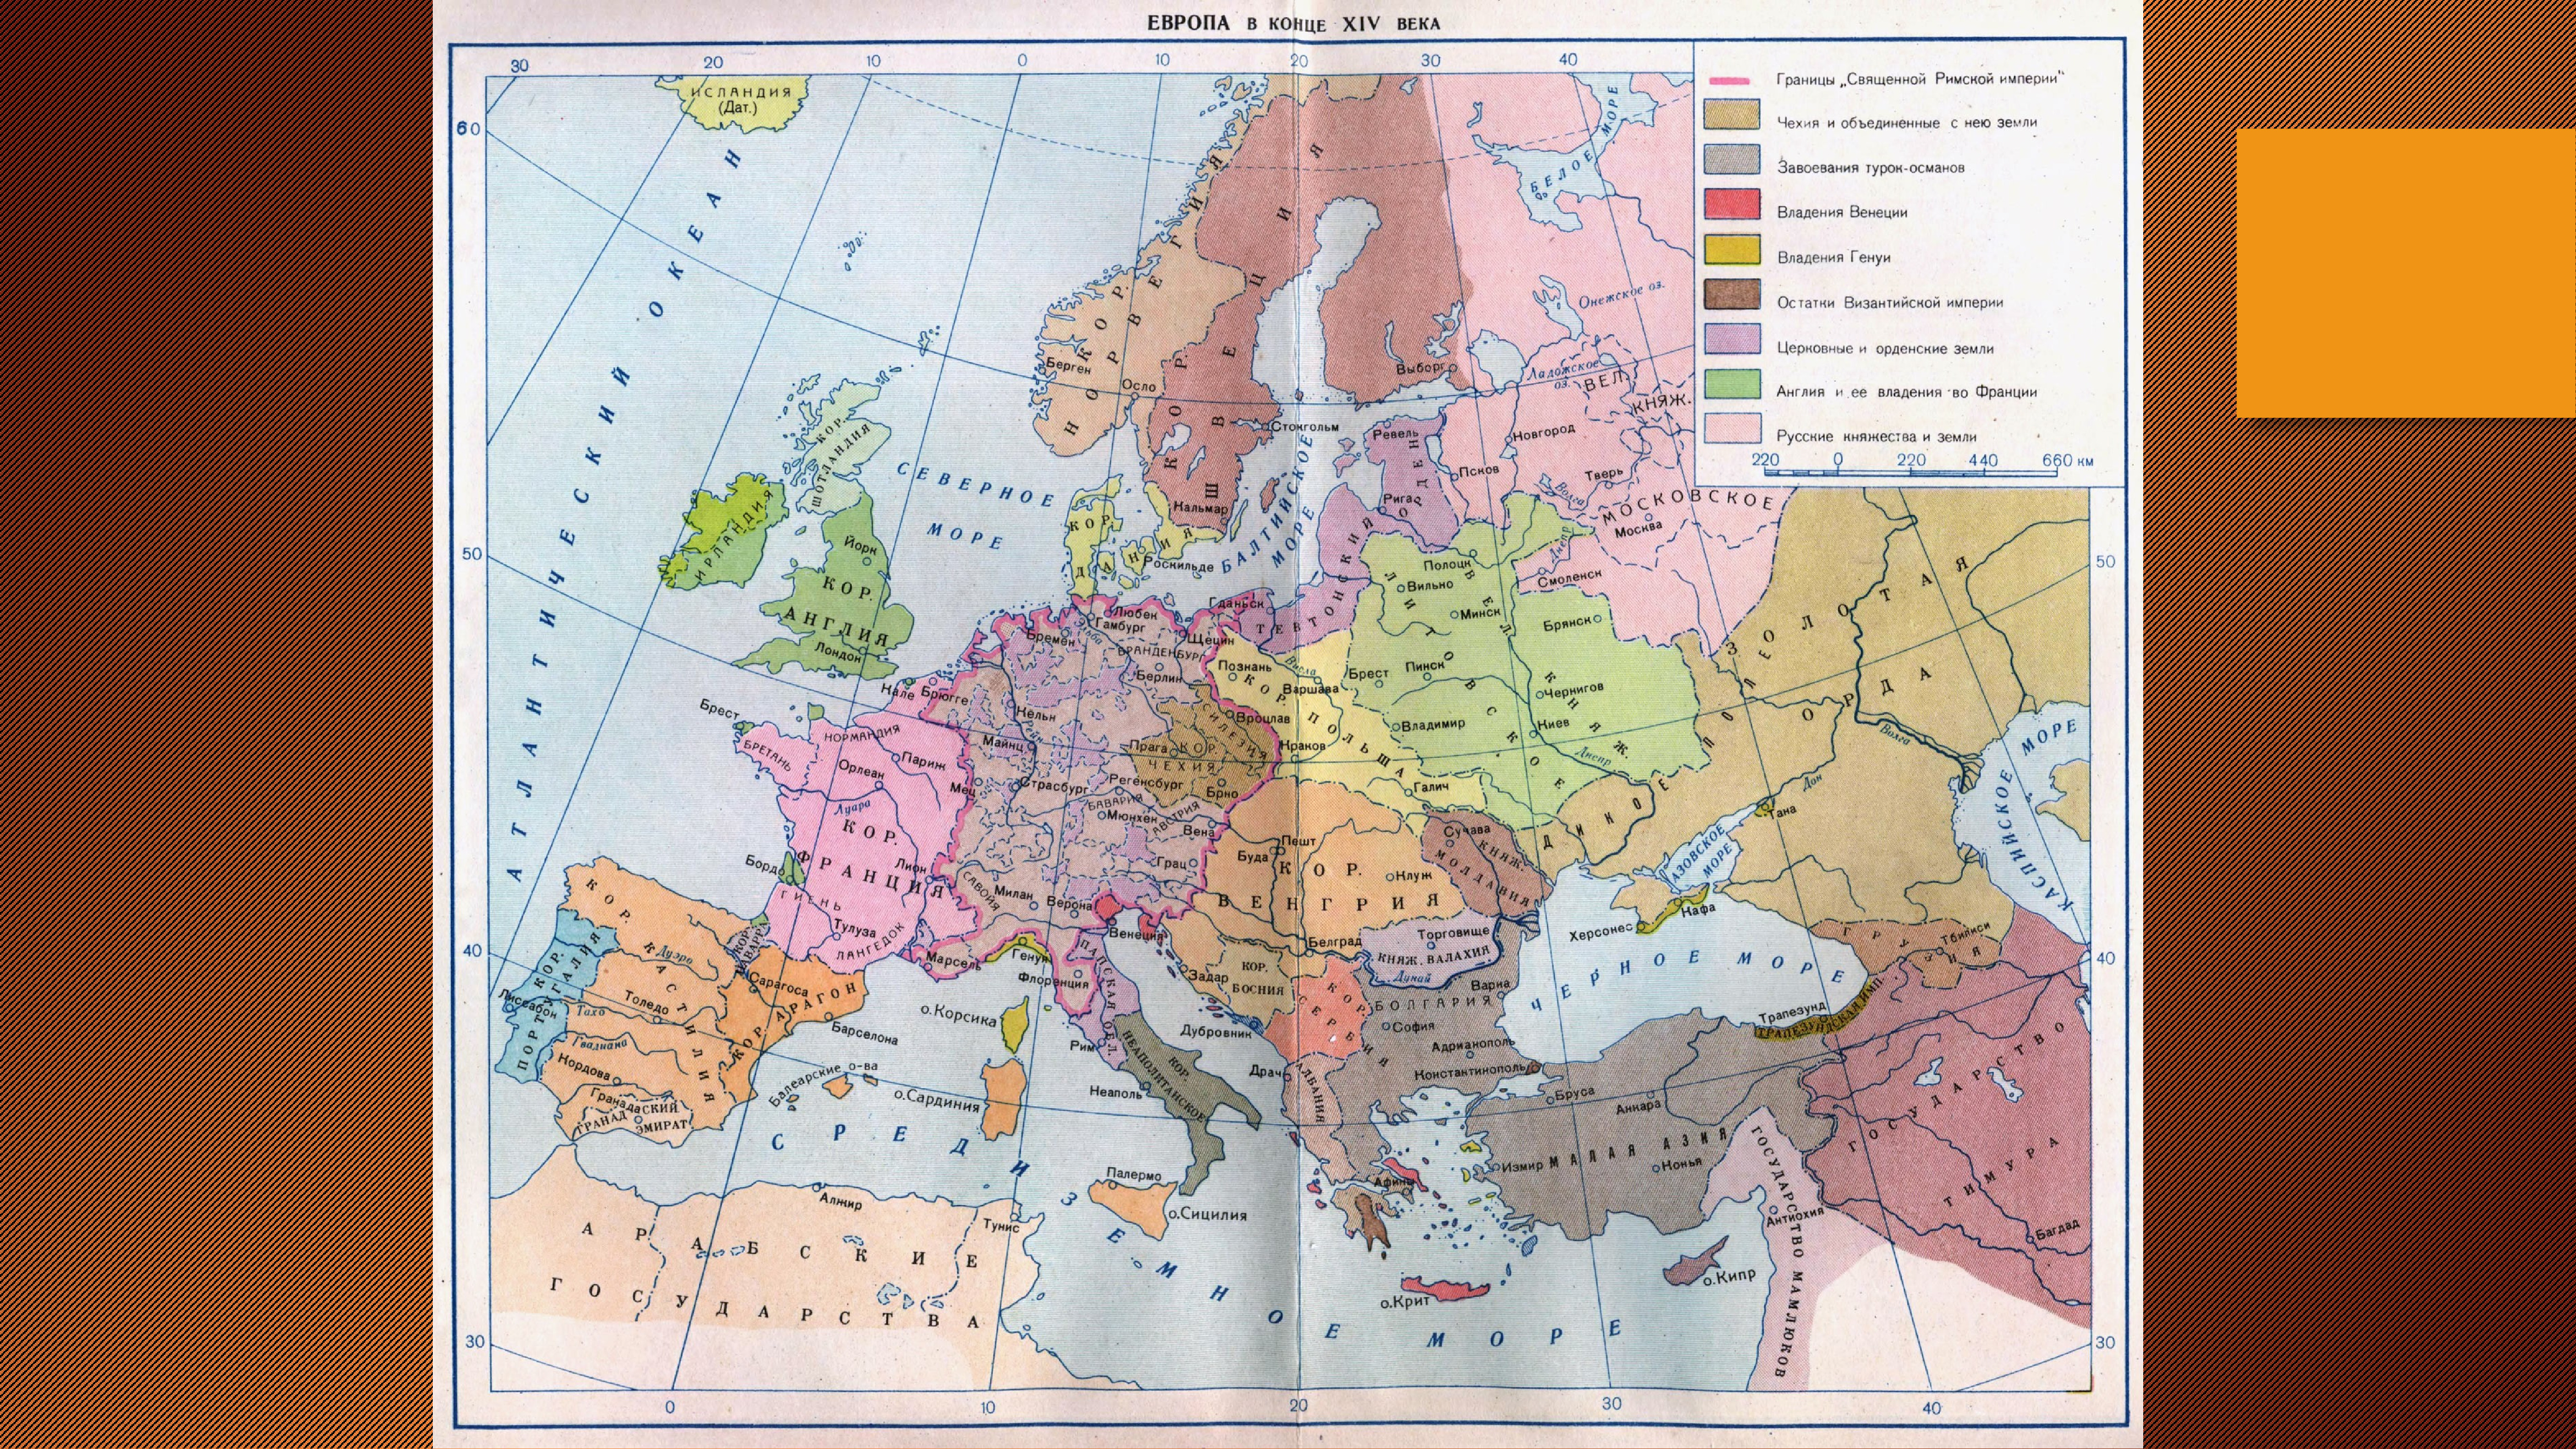 Европа 13 14 века. Карта Европы XIV века. Карта Европы в начале 15 век. Карта Европы 14 века. Карта Европы средневековья 15 век.